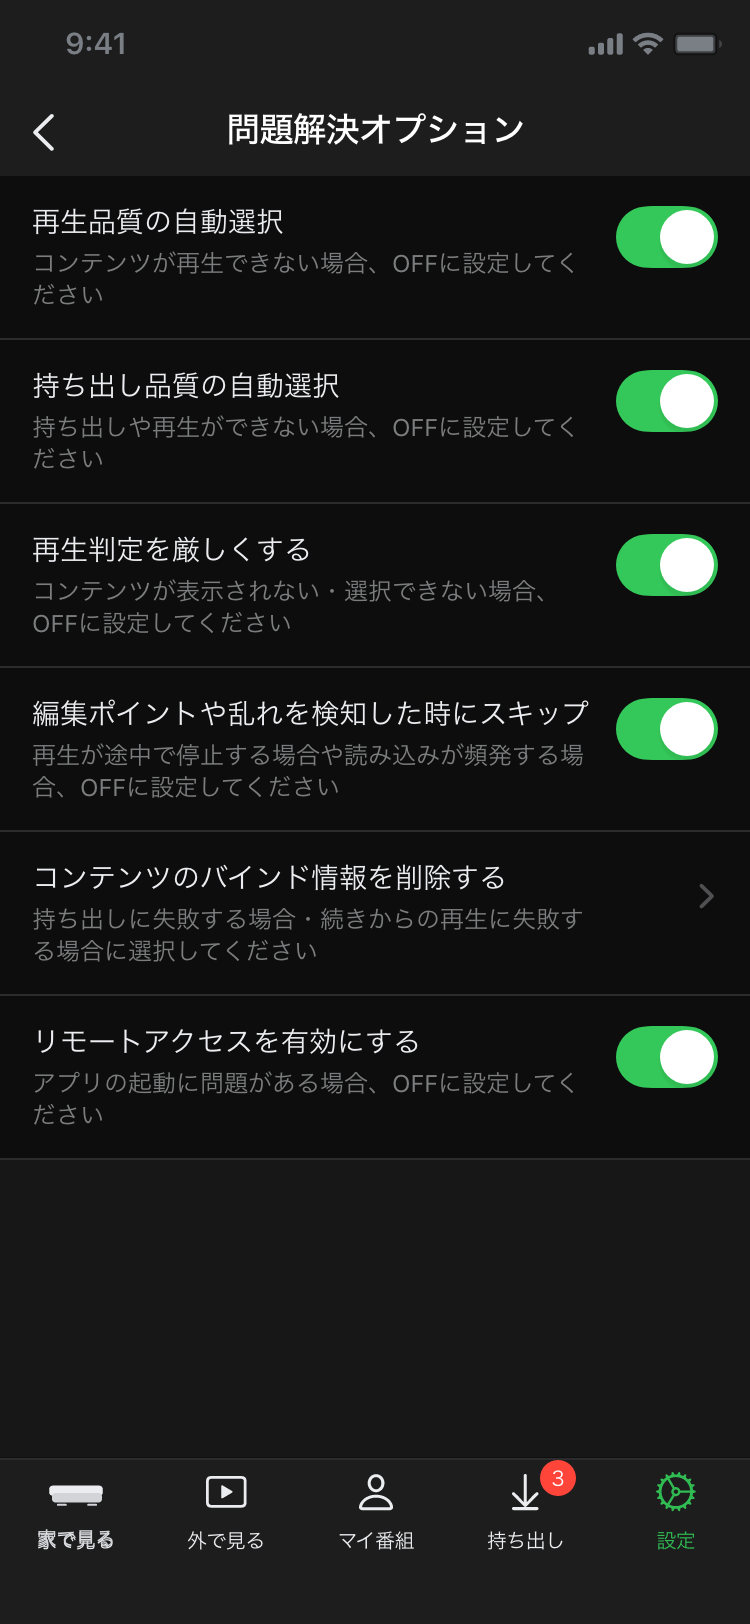 DiXiM Digital TV for iOS 問題解決オプション